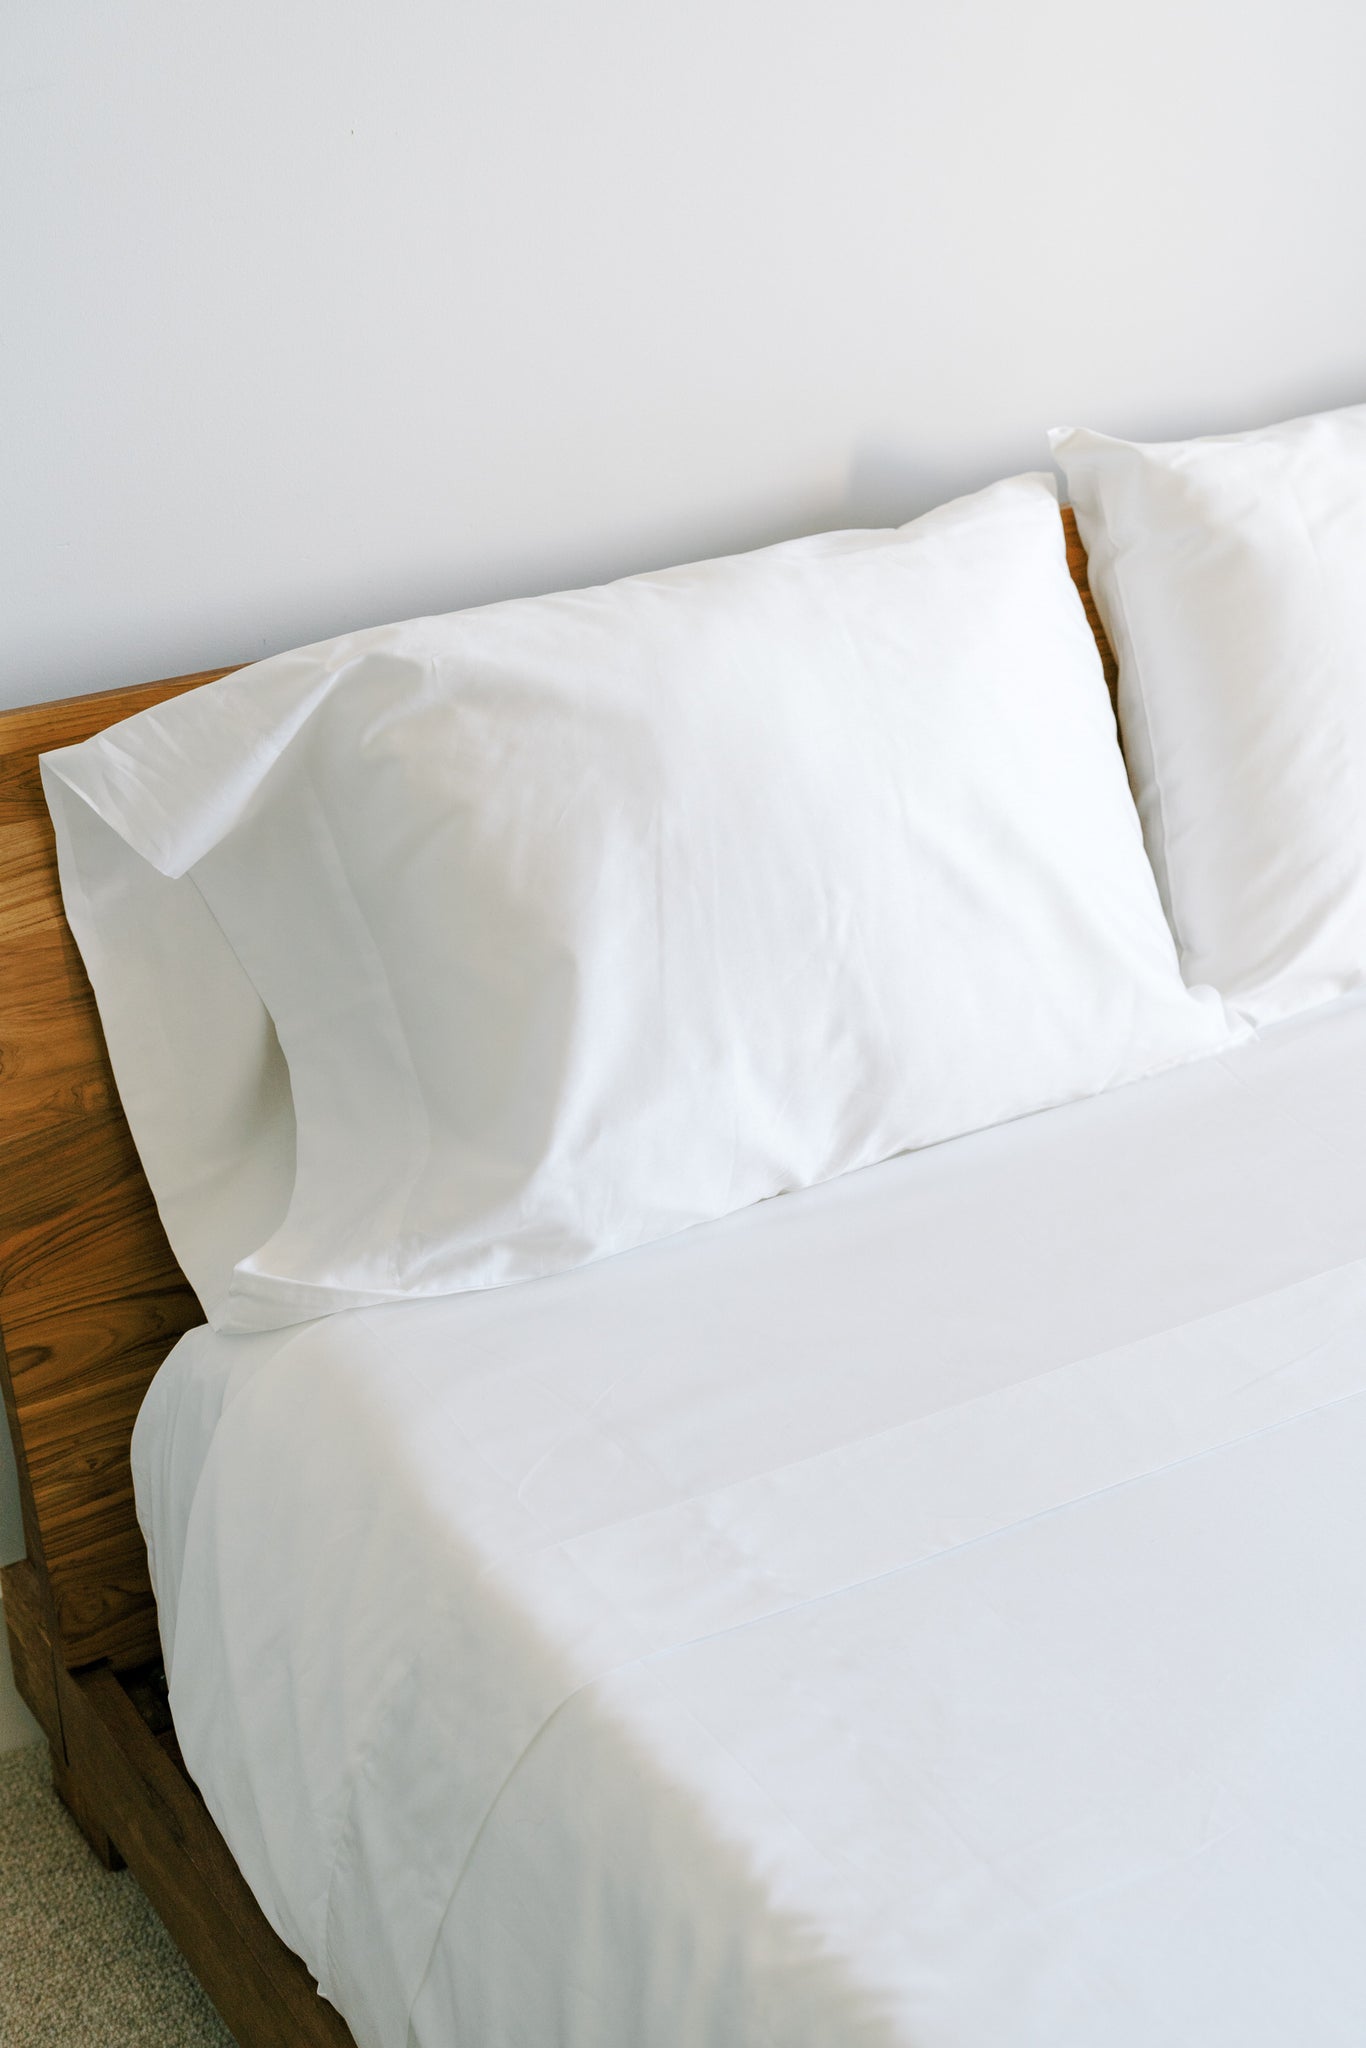 Minimalist bedroom decor featuring pristine white bedding